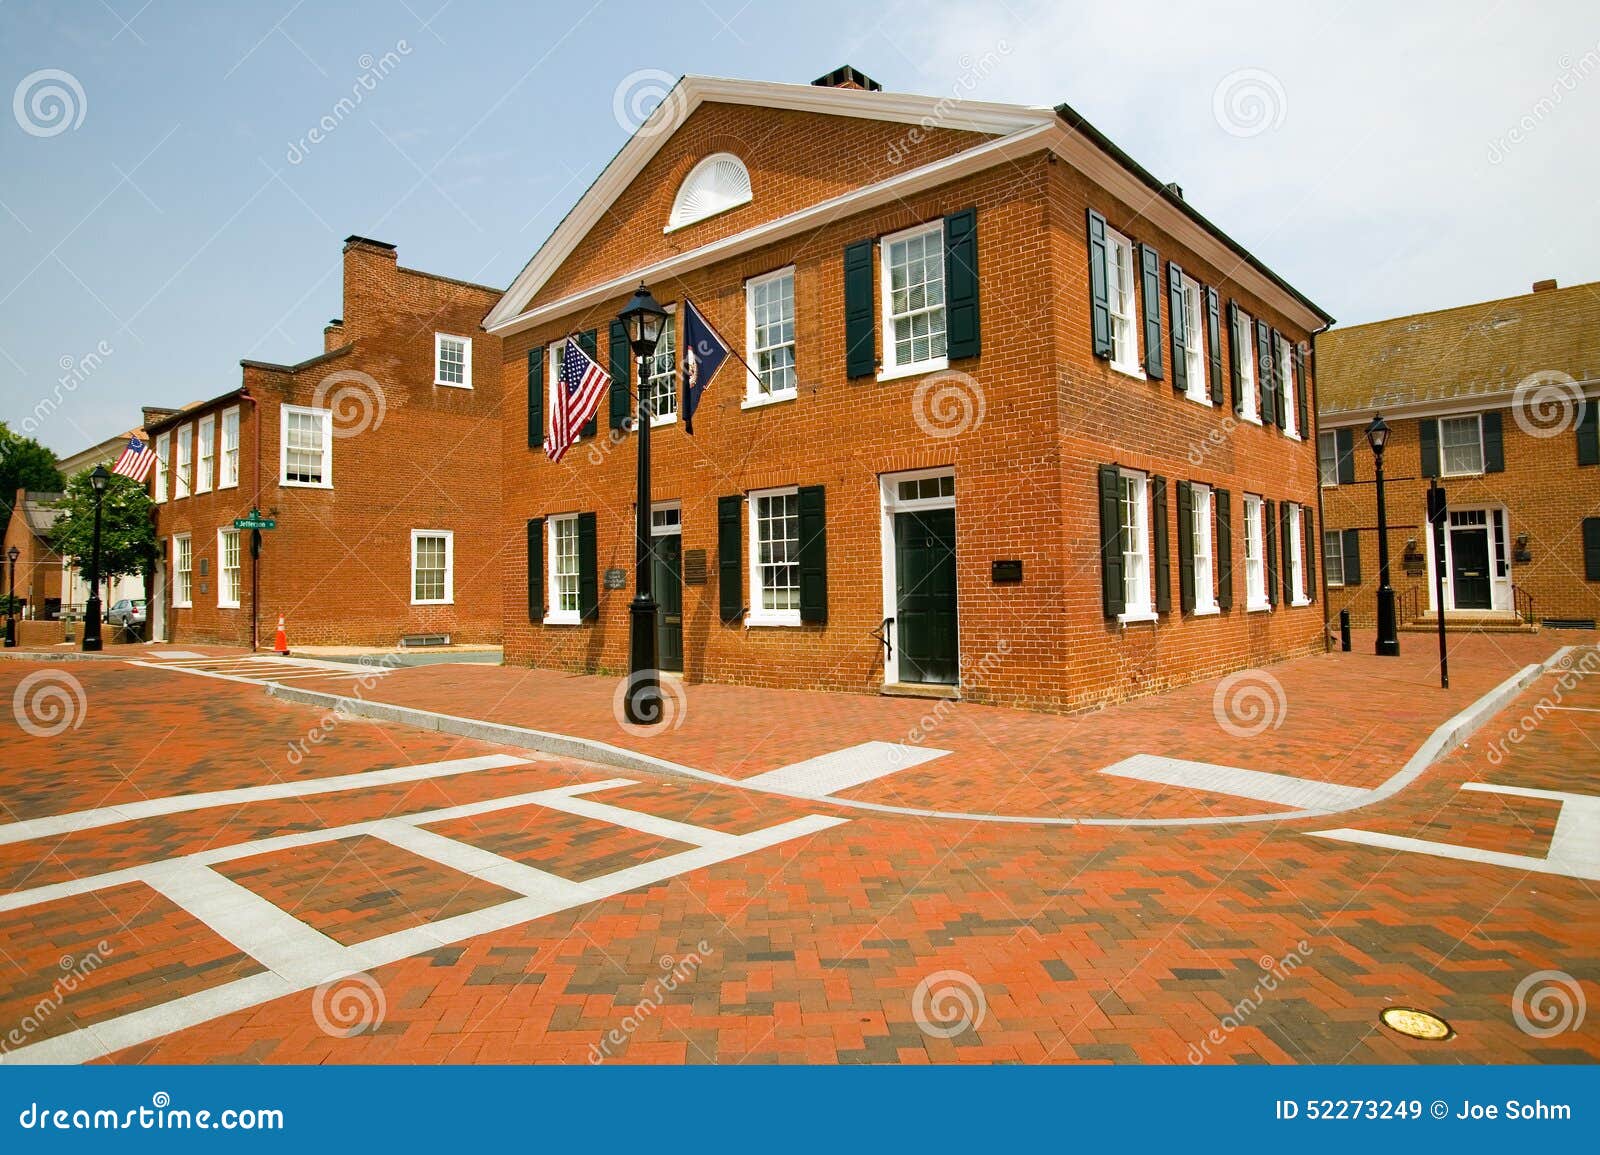 historic district of charlottesville, virginia, home of president thomas jefferson